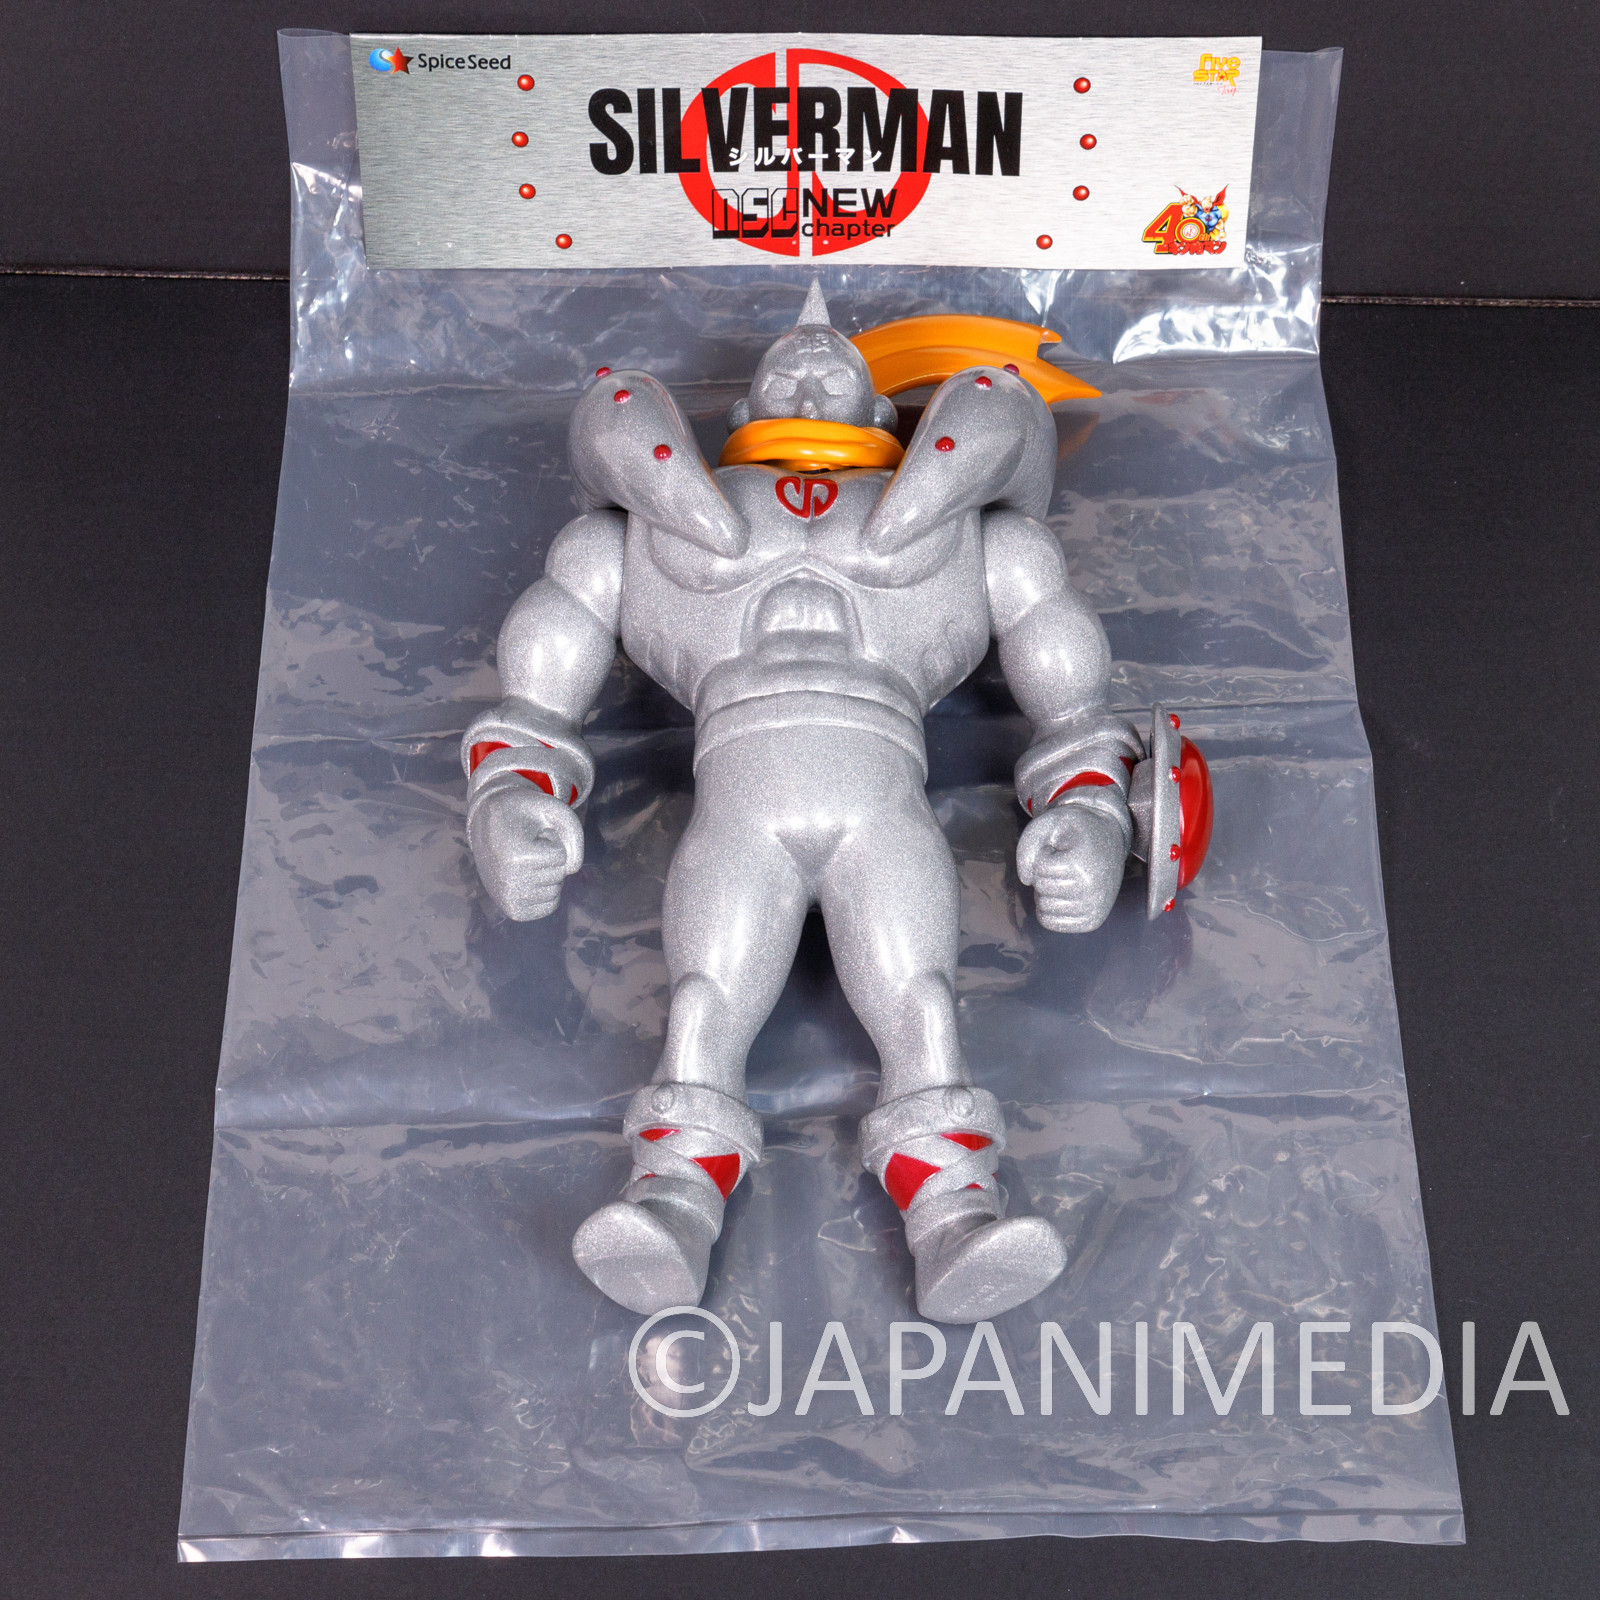 KINNIKUMAN Silverman 12" Soft Vinyl Figure Spice Seed Limited Five Star Toy NSC